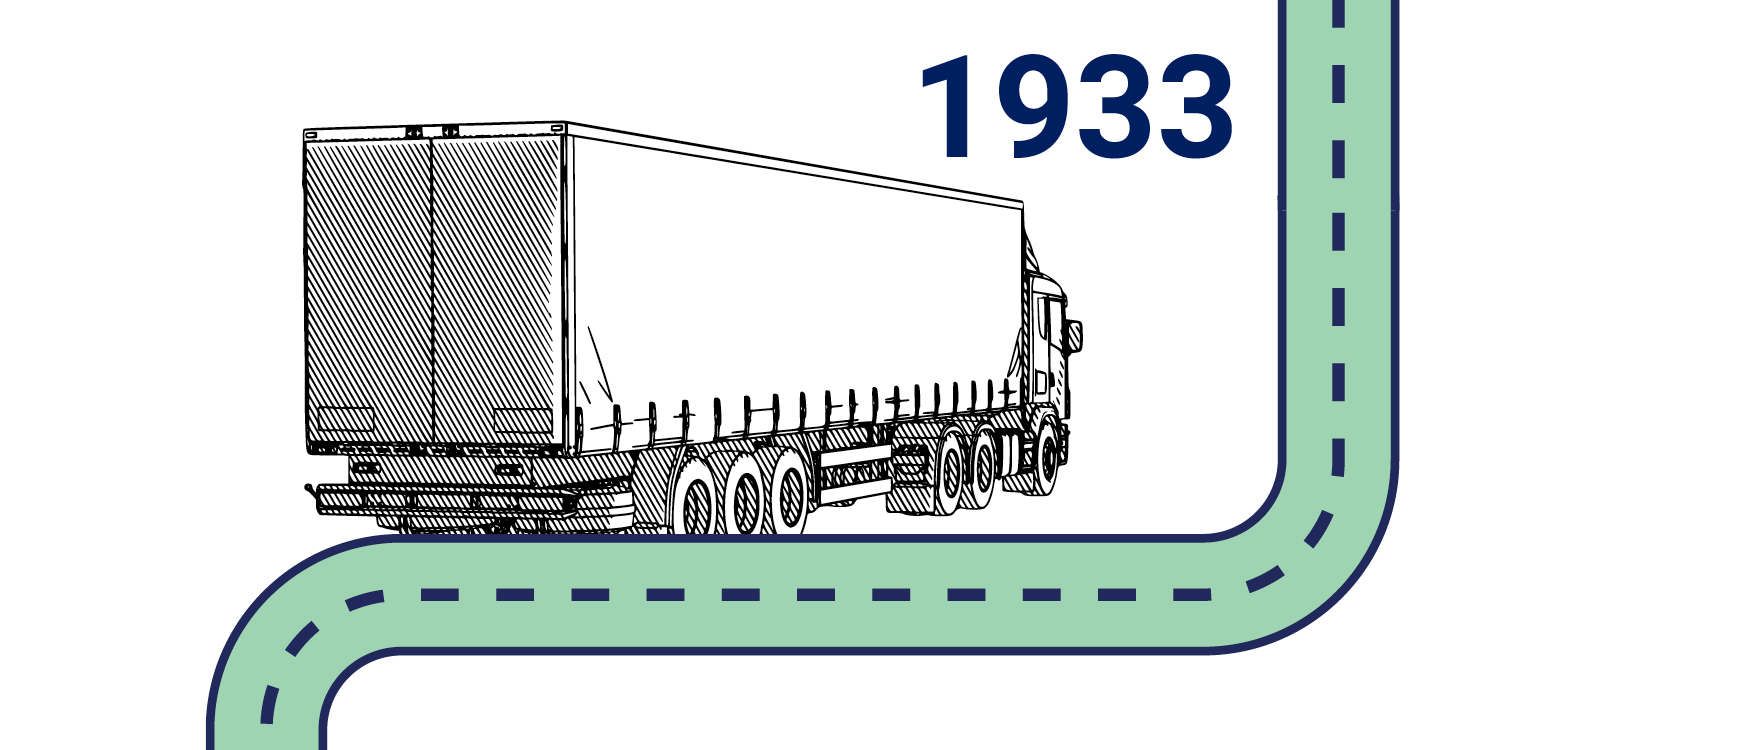 American Trucking Association formed